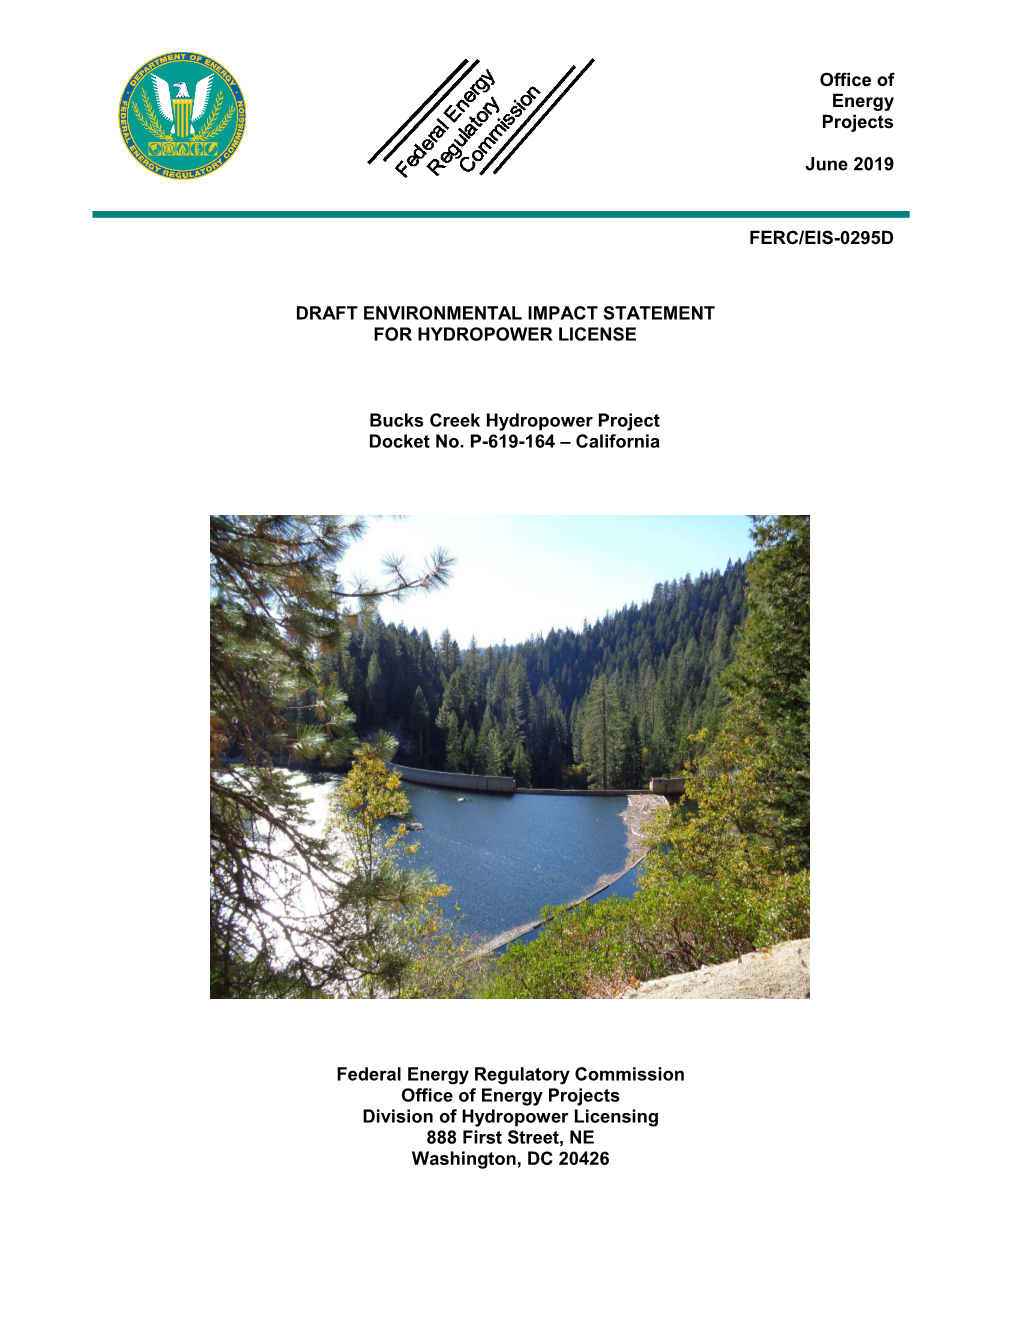 Draft Environmental Impact Statement for the Bucks Creek Hydropower